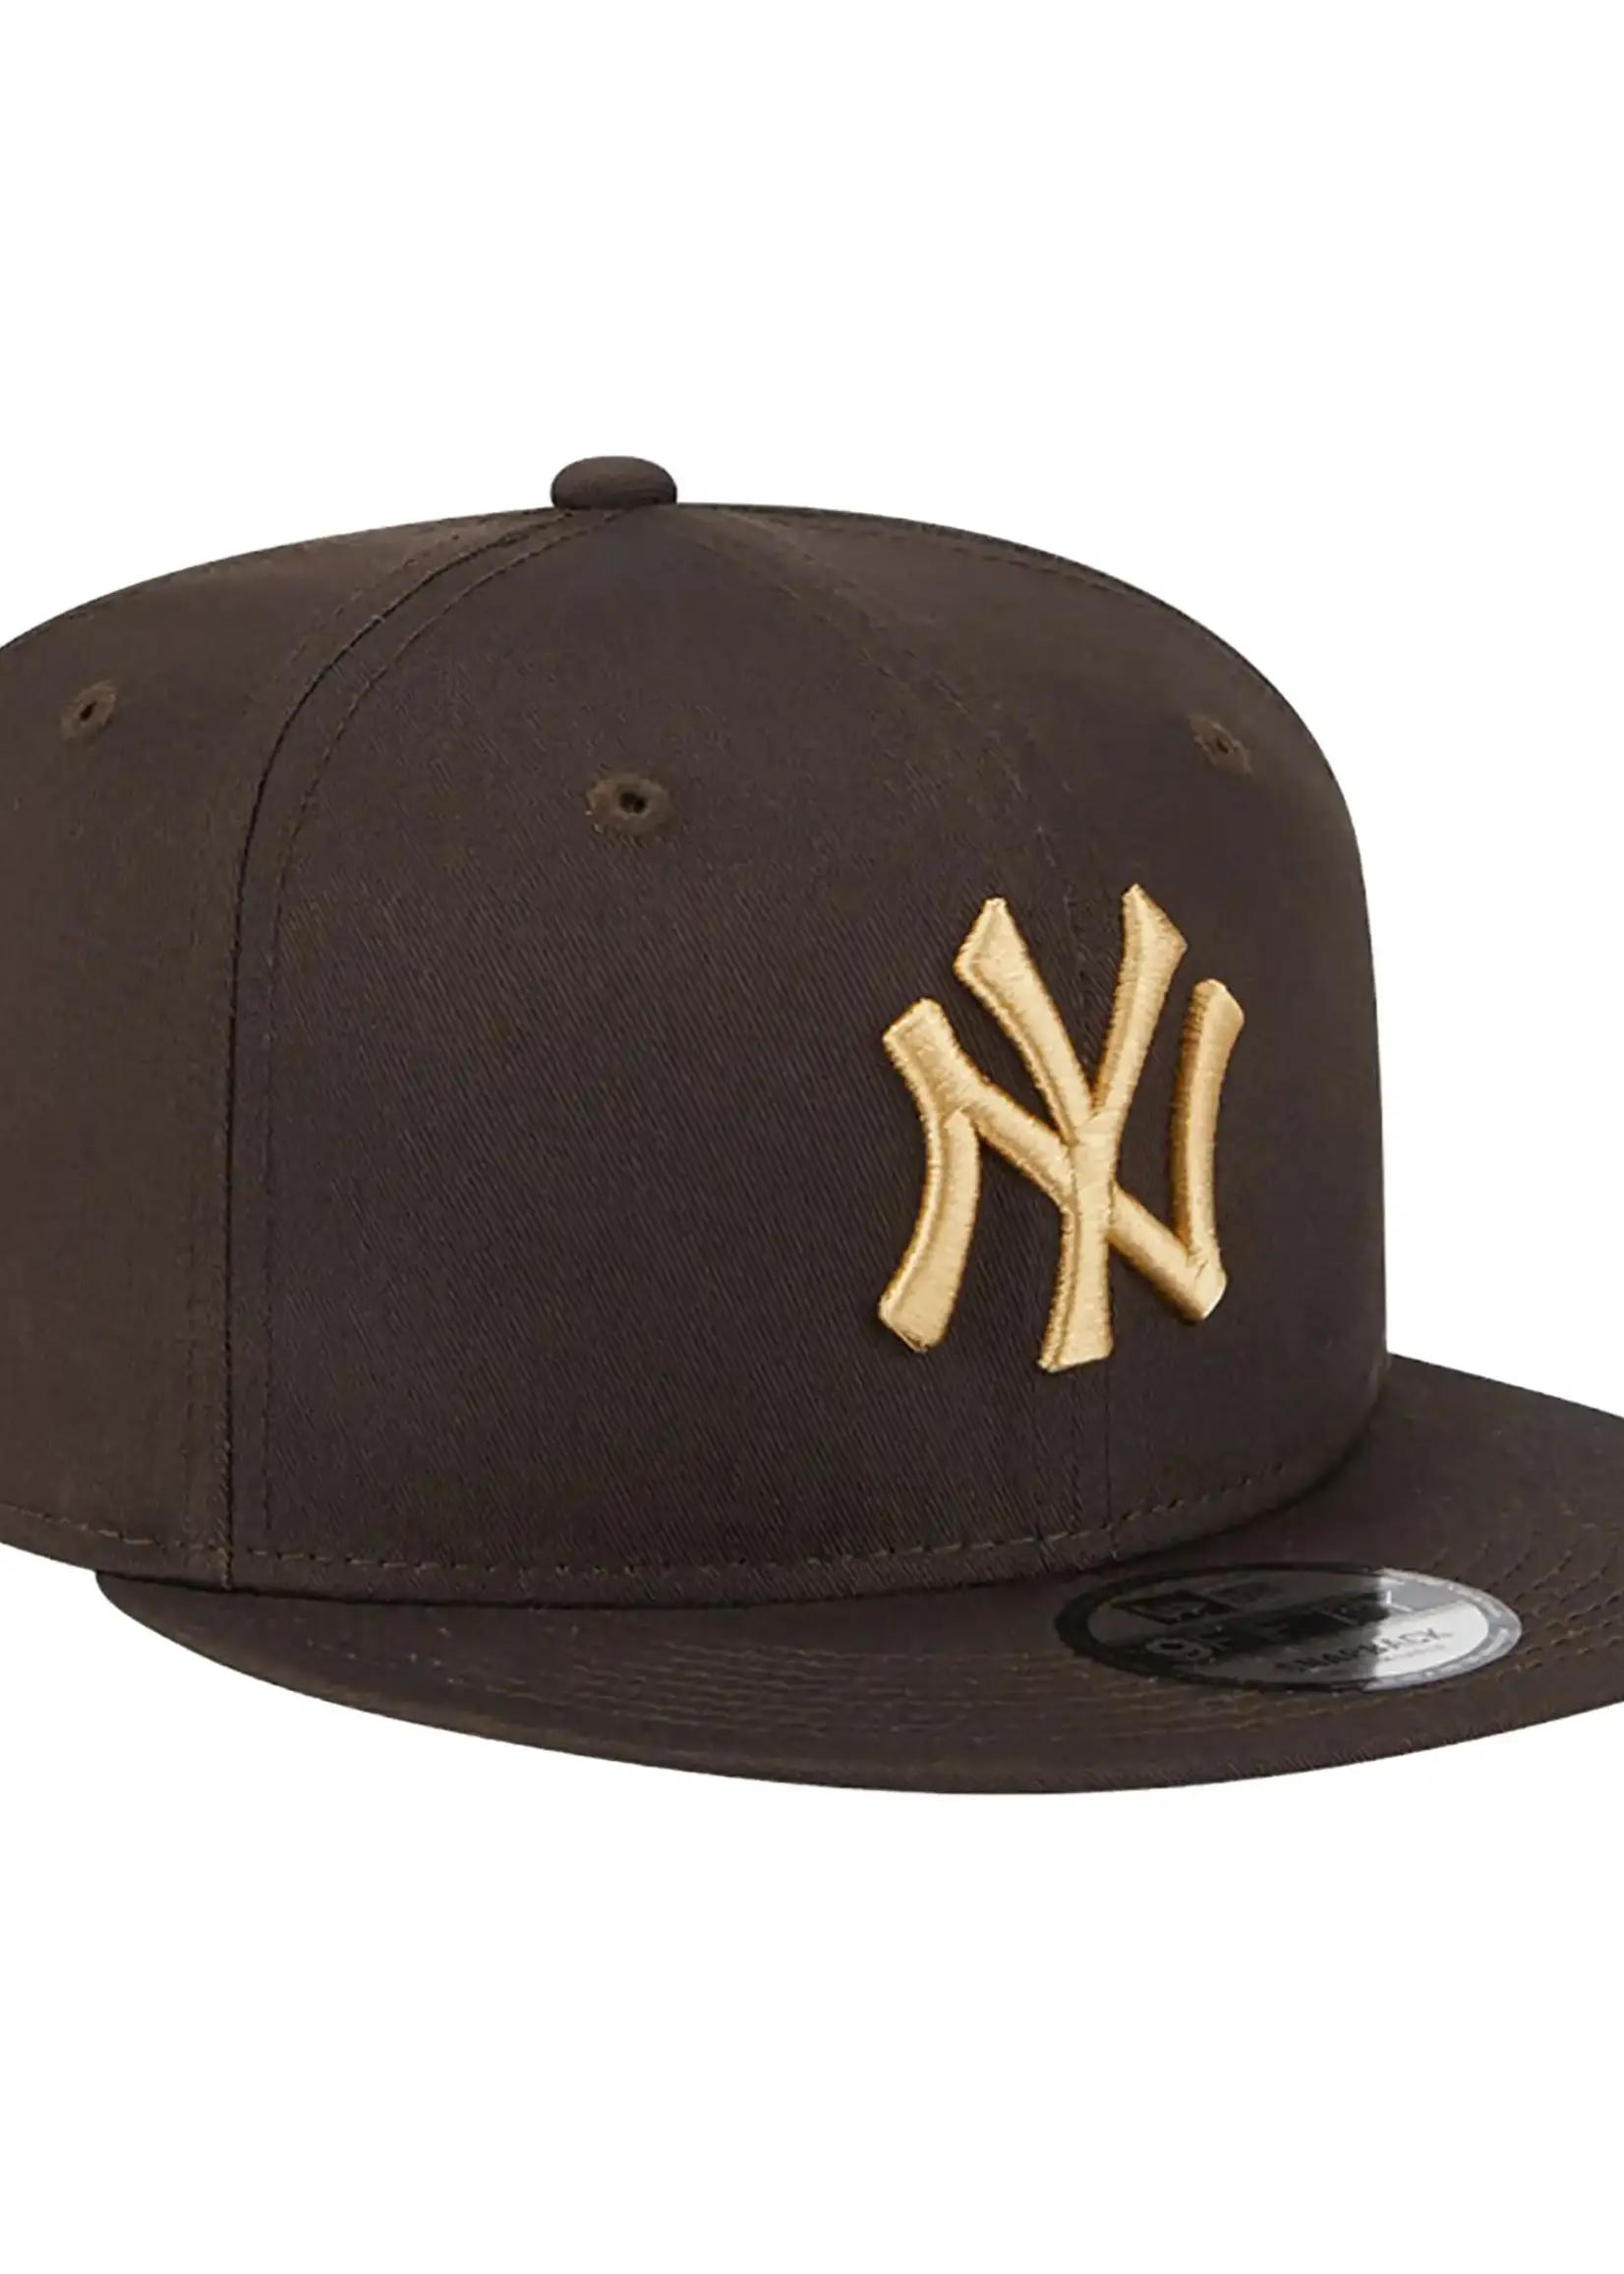 New Era New York Yankees 9Fifty Brown Camel